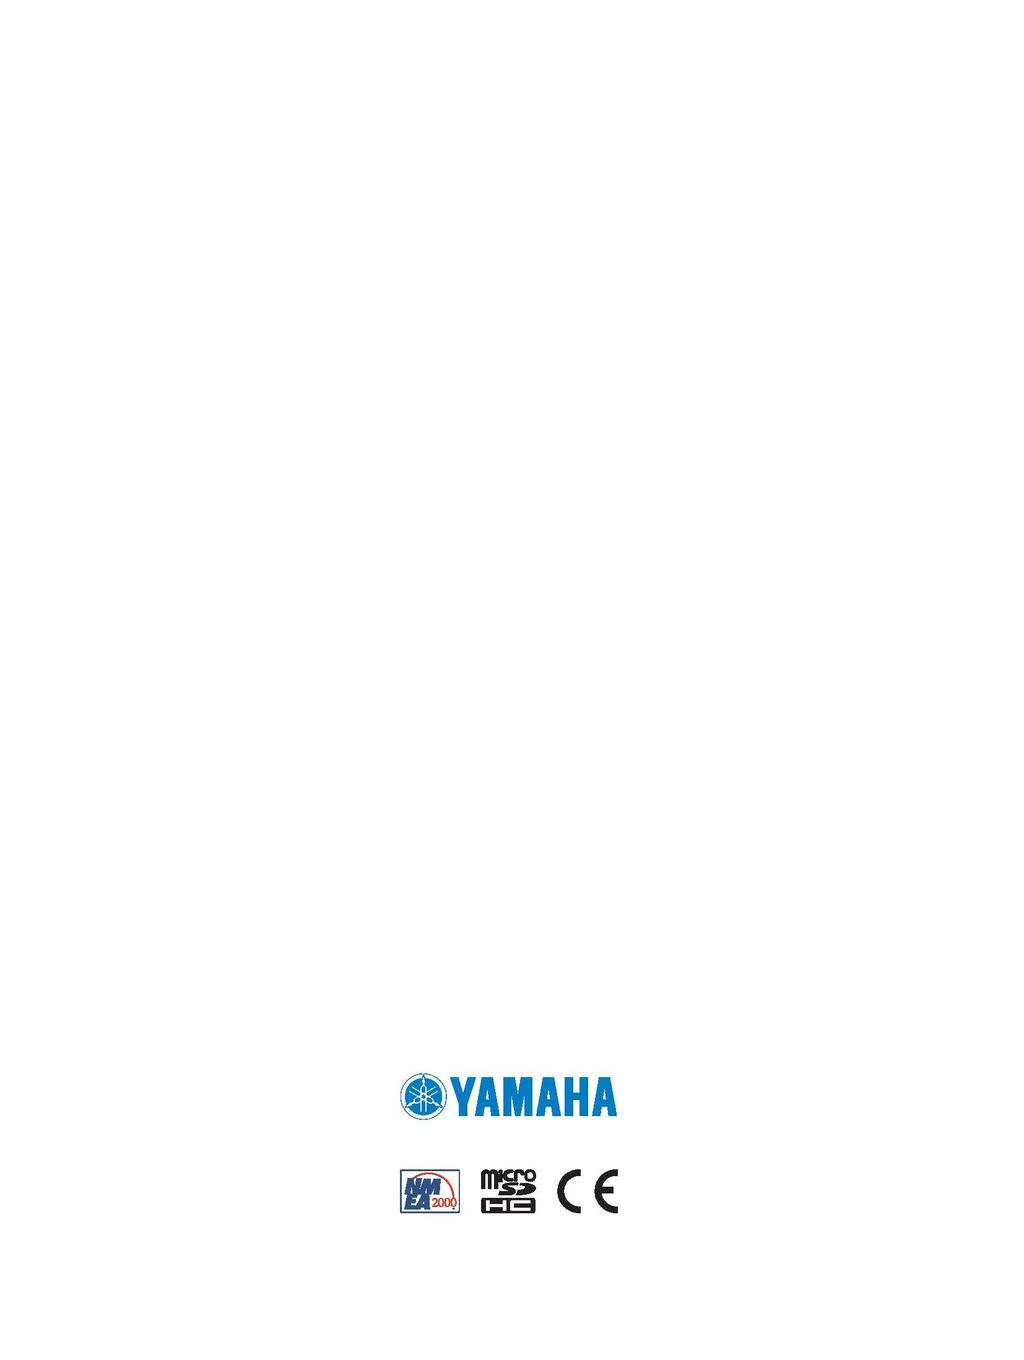 2017 YAMAHA Motor Co., LTD ή οι θυγατρικές της Η ονομασία Yamaha, το λογότυπο Yamaha, οι ονομασίες Command Link Plus, και Helm Master είναι εμπορικά σήματα της YAMAHA Motor Co., LTD. Η ονομασία Garmin, το λογότυπο Garmin και η ονομασία BlueChart αποτελούν εμπορικά σήματα της Garmin Ltd.